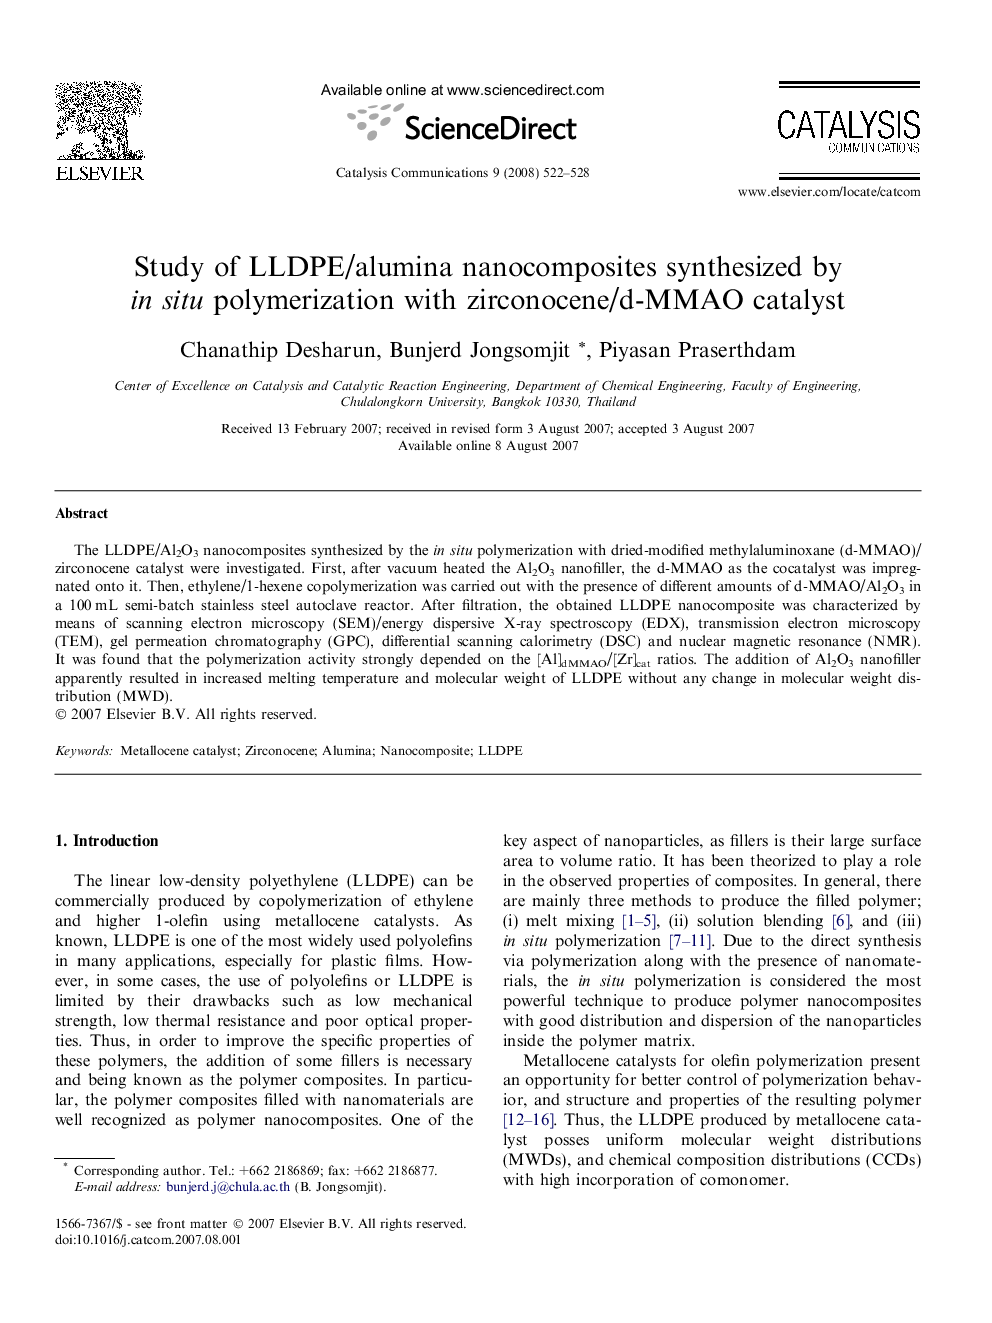 Study of LLDPE/alumina nanocomposites synthesized by insitu polymerization with zirconocene/d-MMAO catalyst